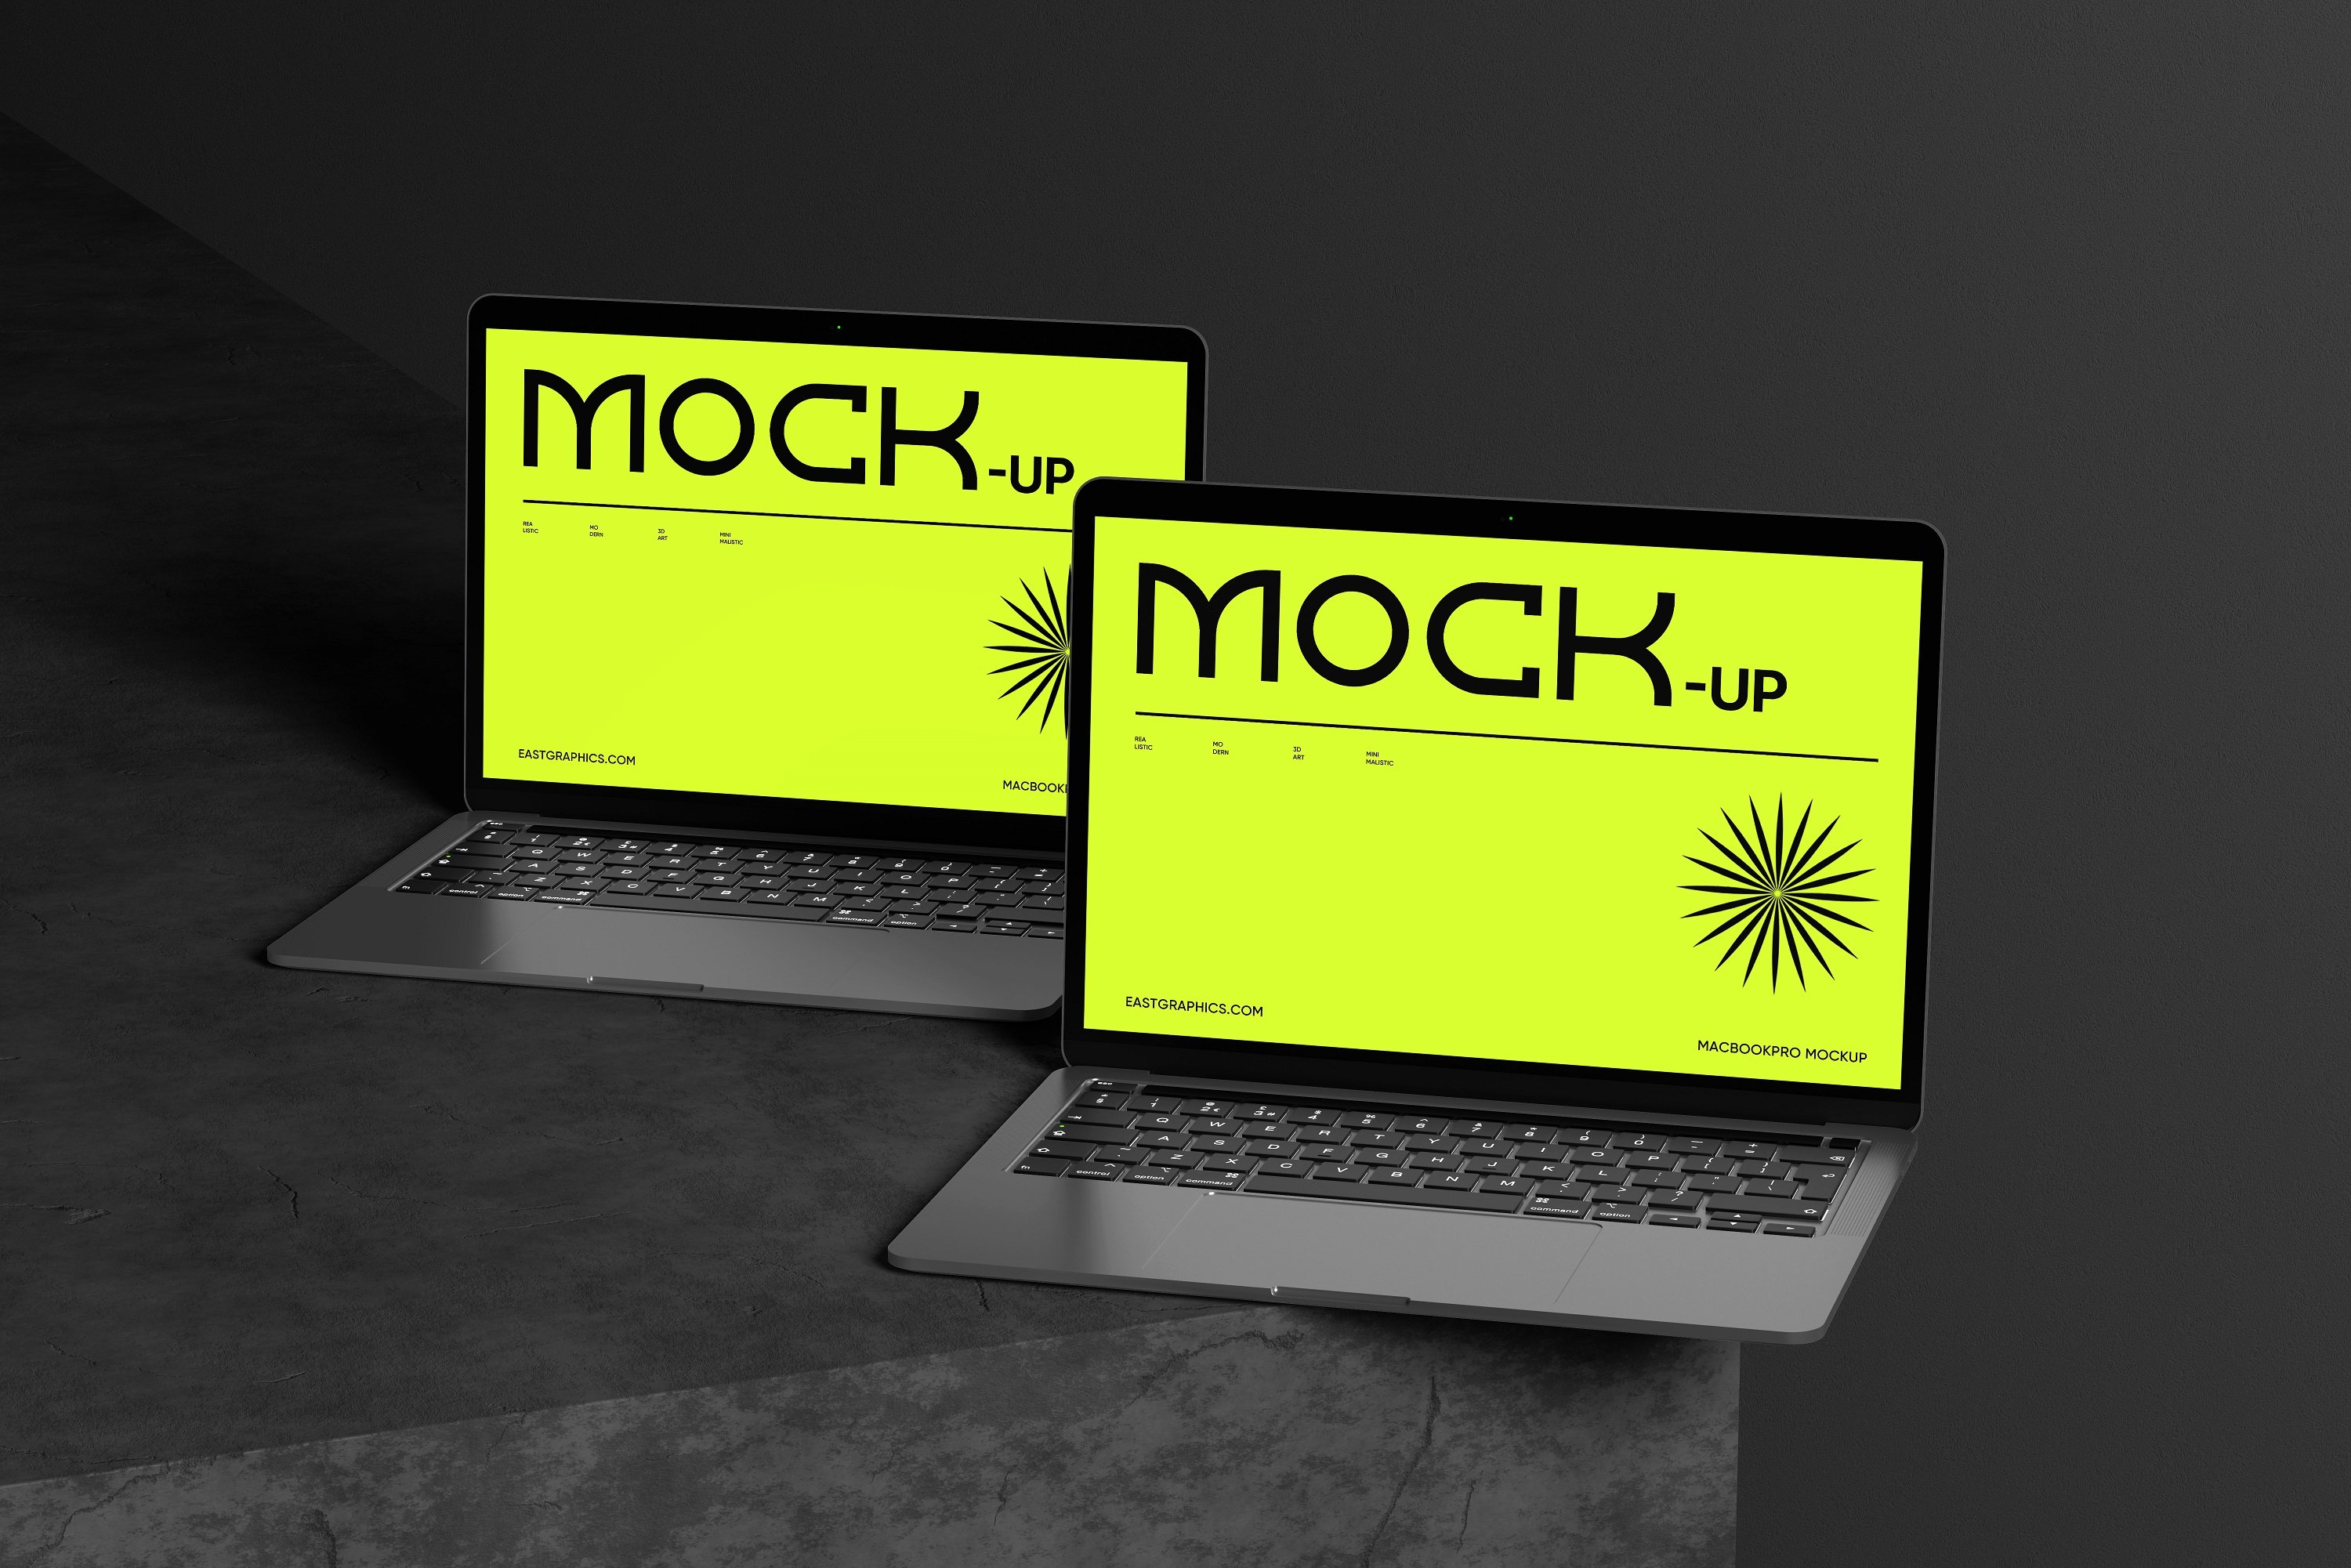 Macbook Pro Mockup preview image.